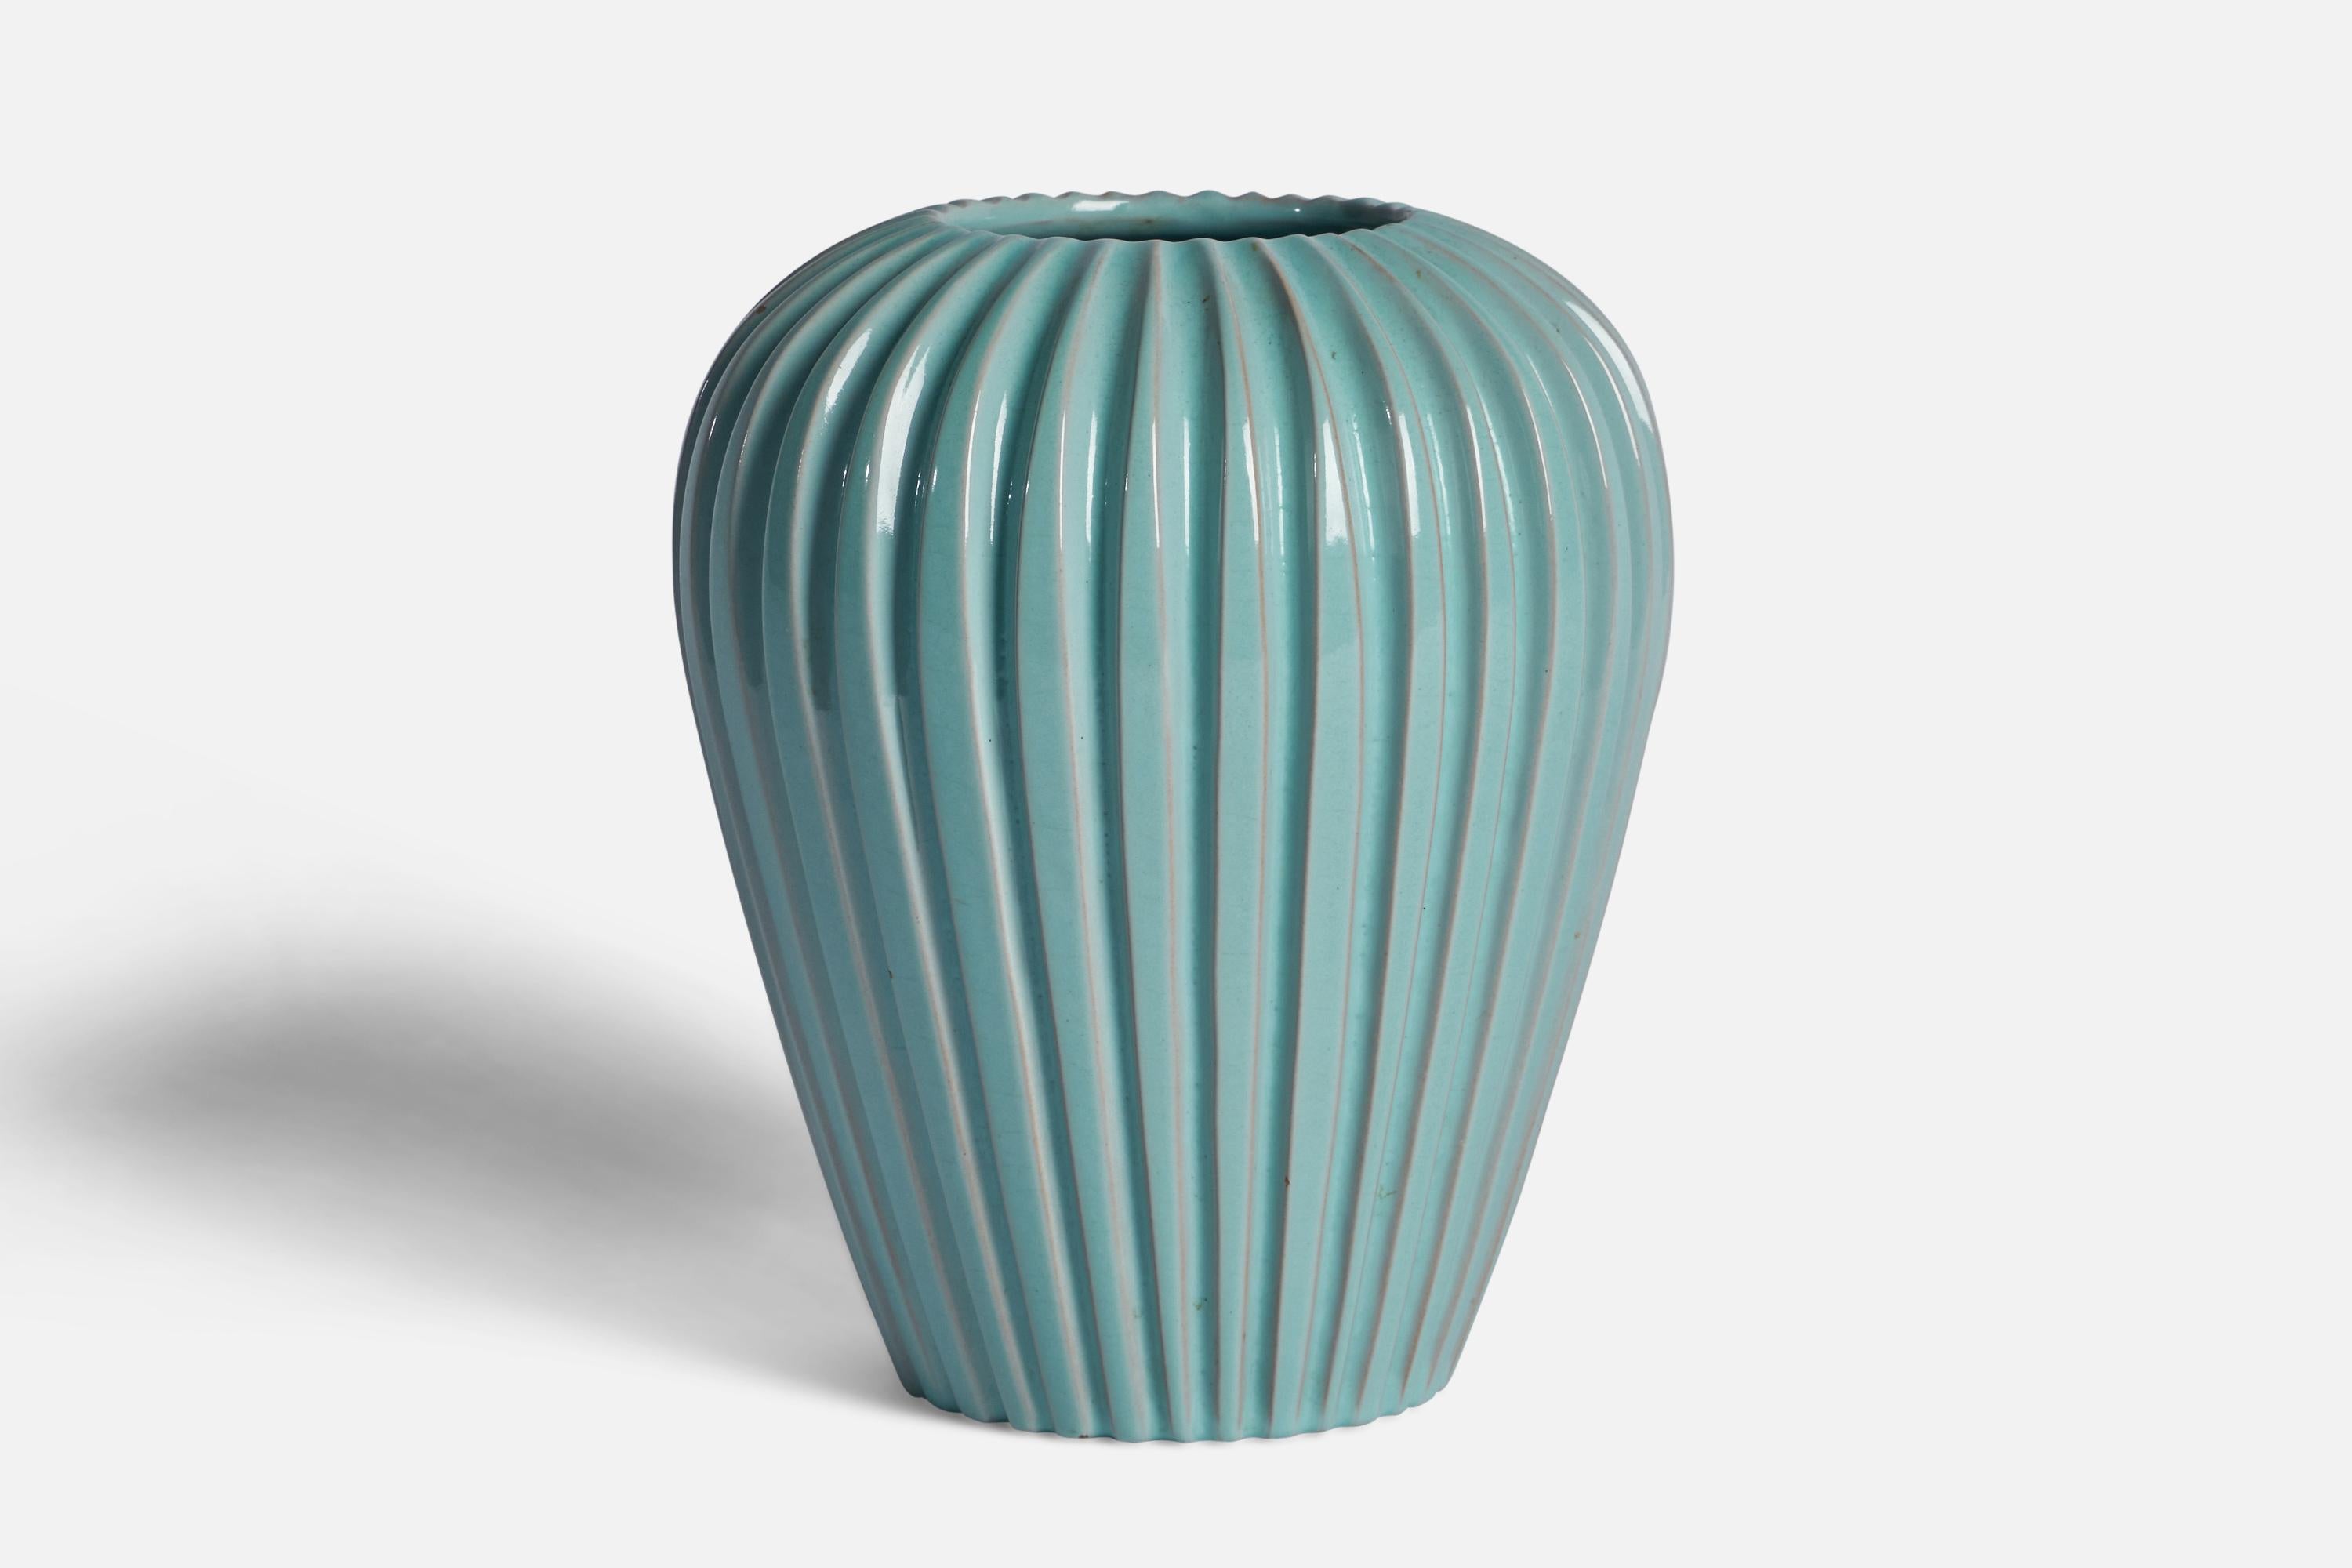 A teal-glazed fluted stoneware vase designed and produced by Eslau Keramik, Denmark, c. 1950s.